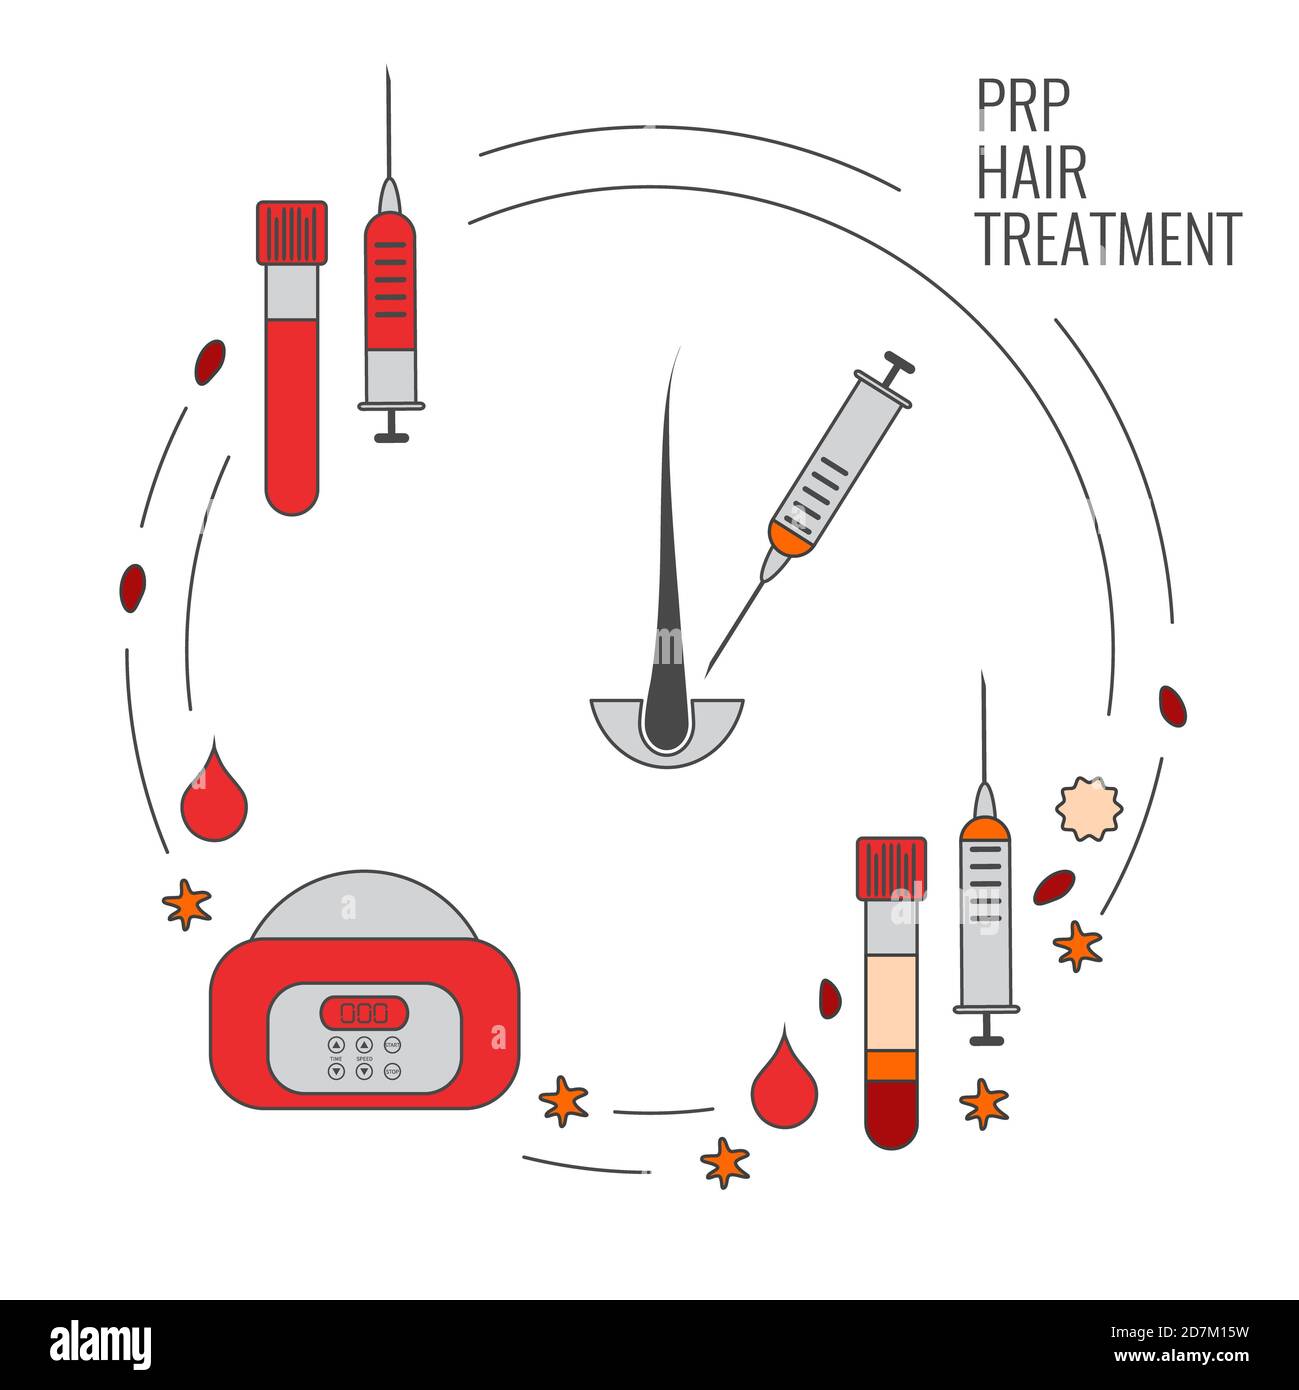 Thrombozytenreiches Plasma (PRP) Behandlung, Illustration. Stockfoto